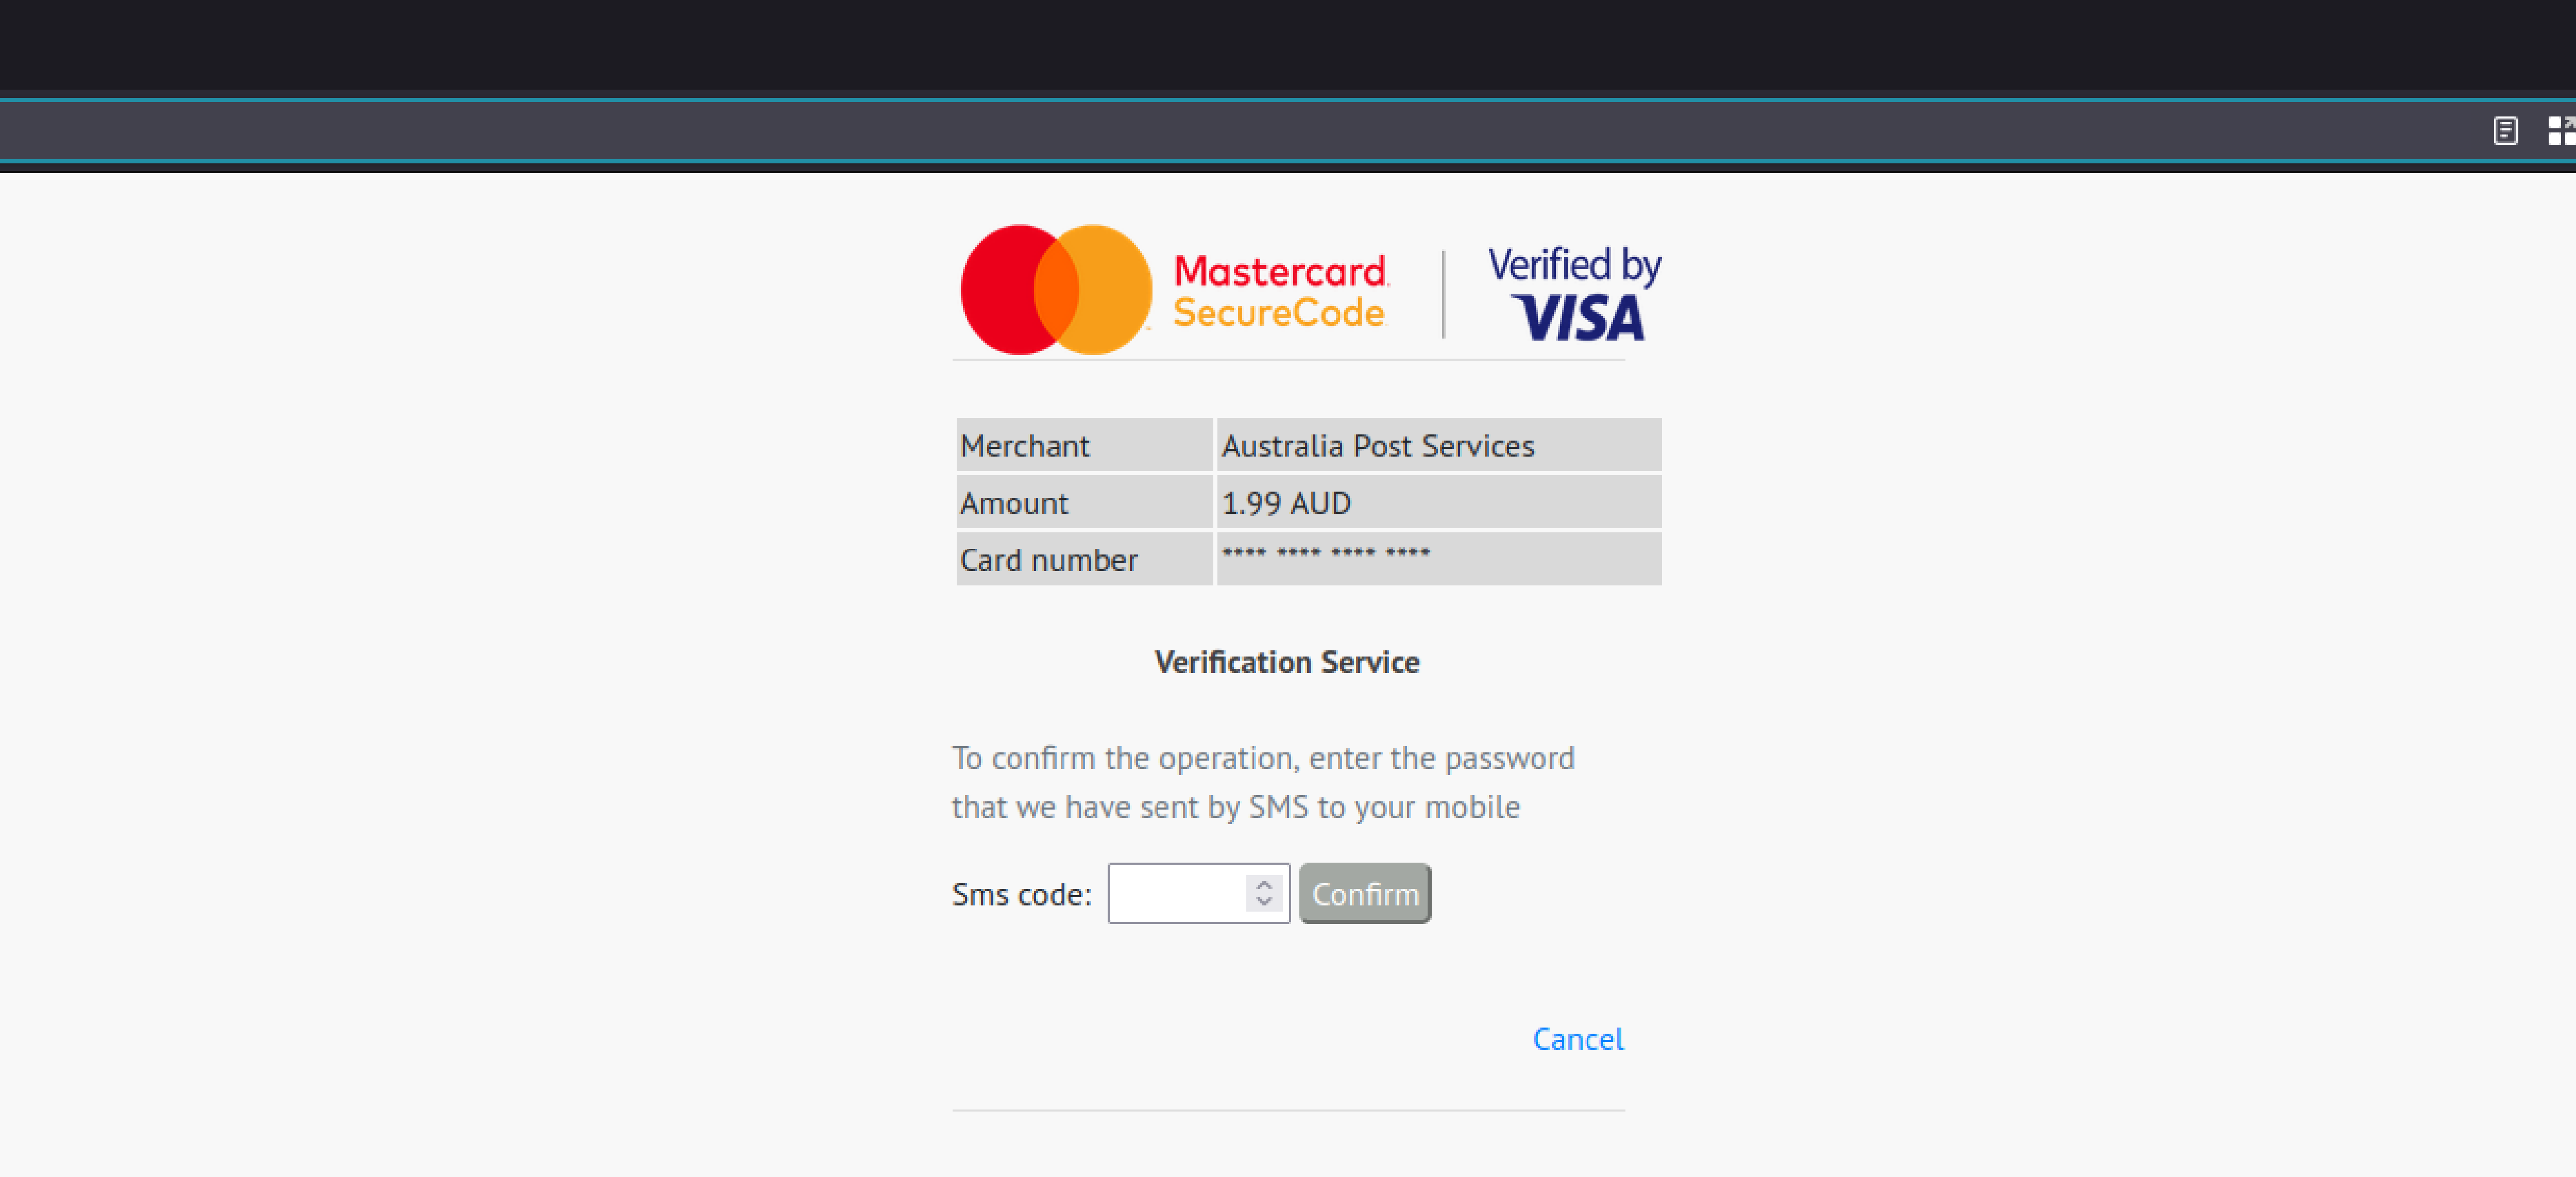 auspost-scam-creditcard-details-0322-01